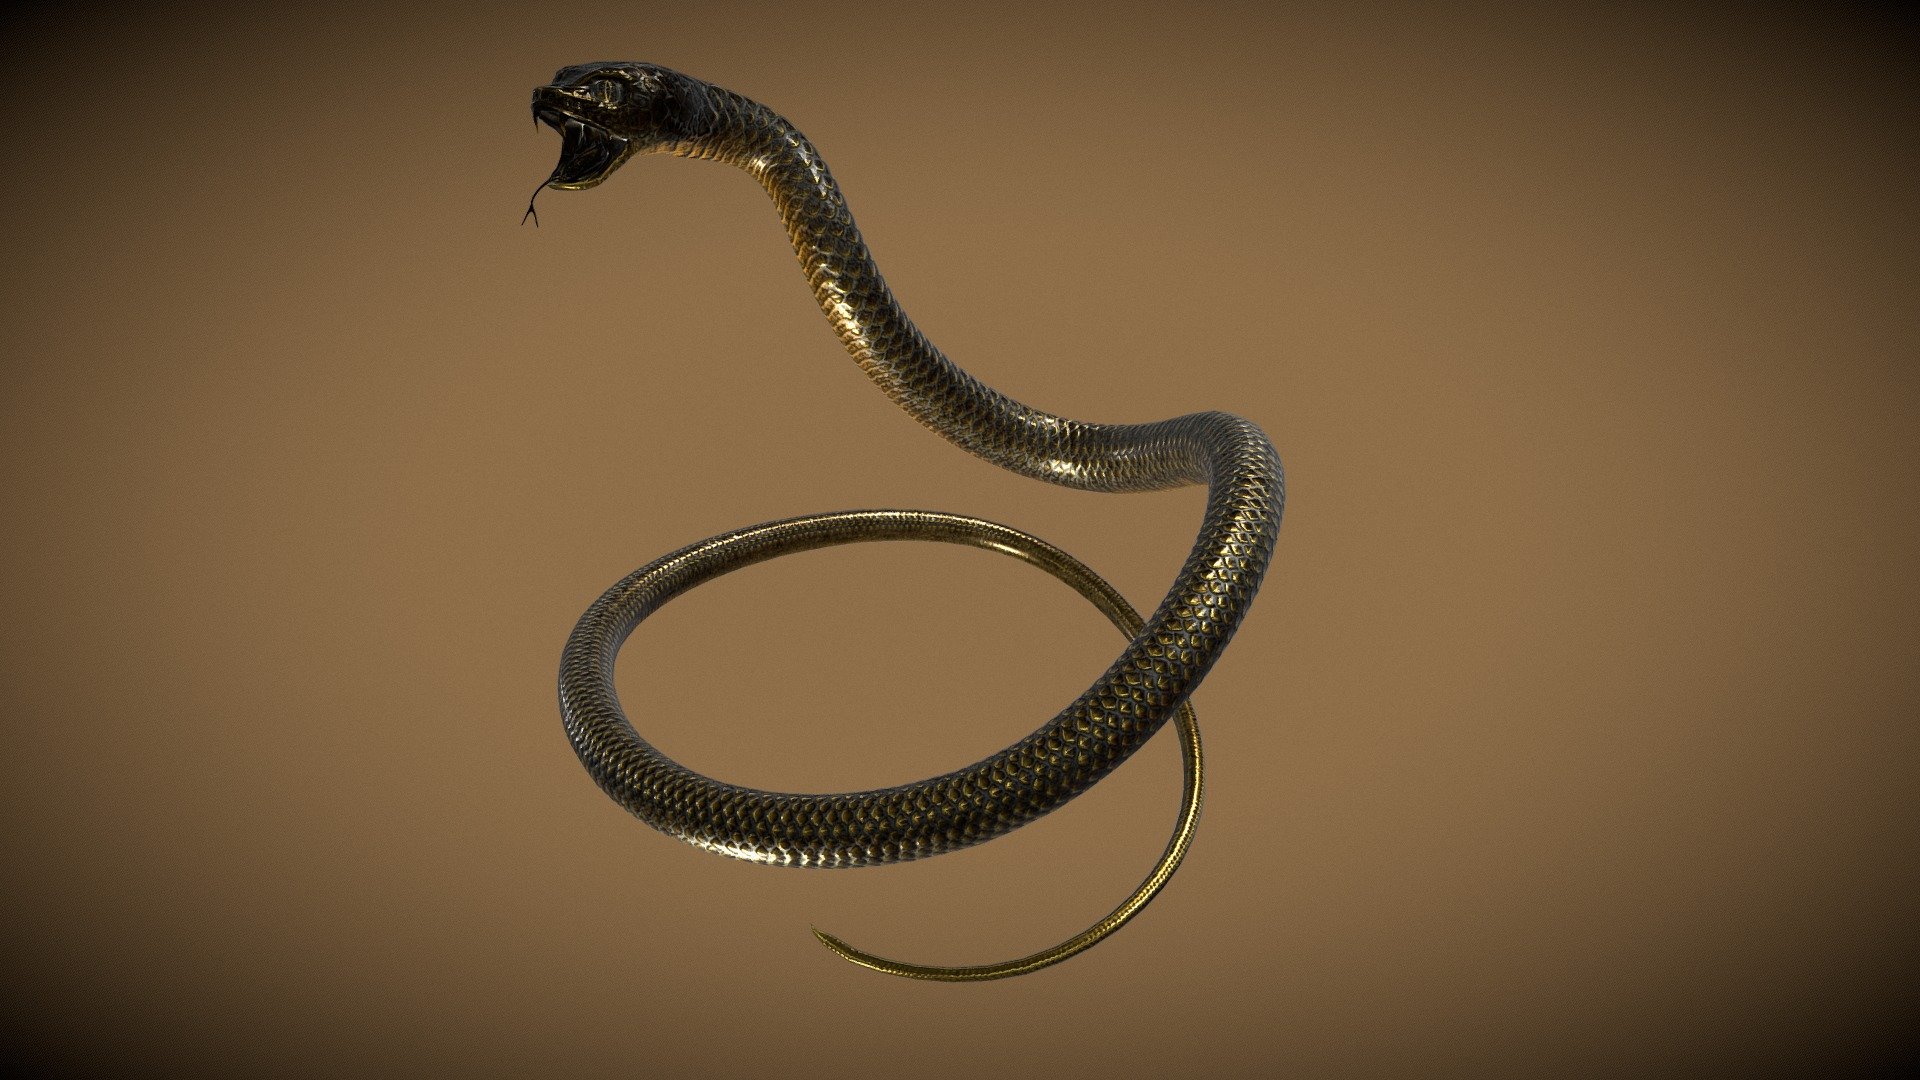 Made with Blender and SubstancePainter
PBR Texture 4K (diffusse, roughness, metallic, normal map) - Snake - 3D model by egorova.e (@silentegor) 3d model